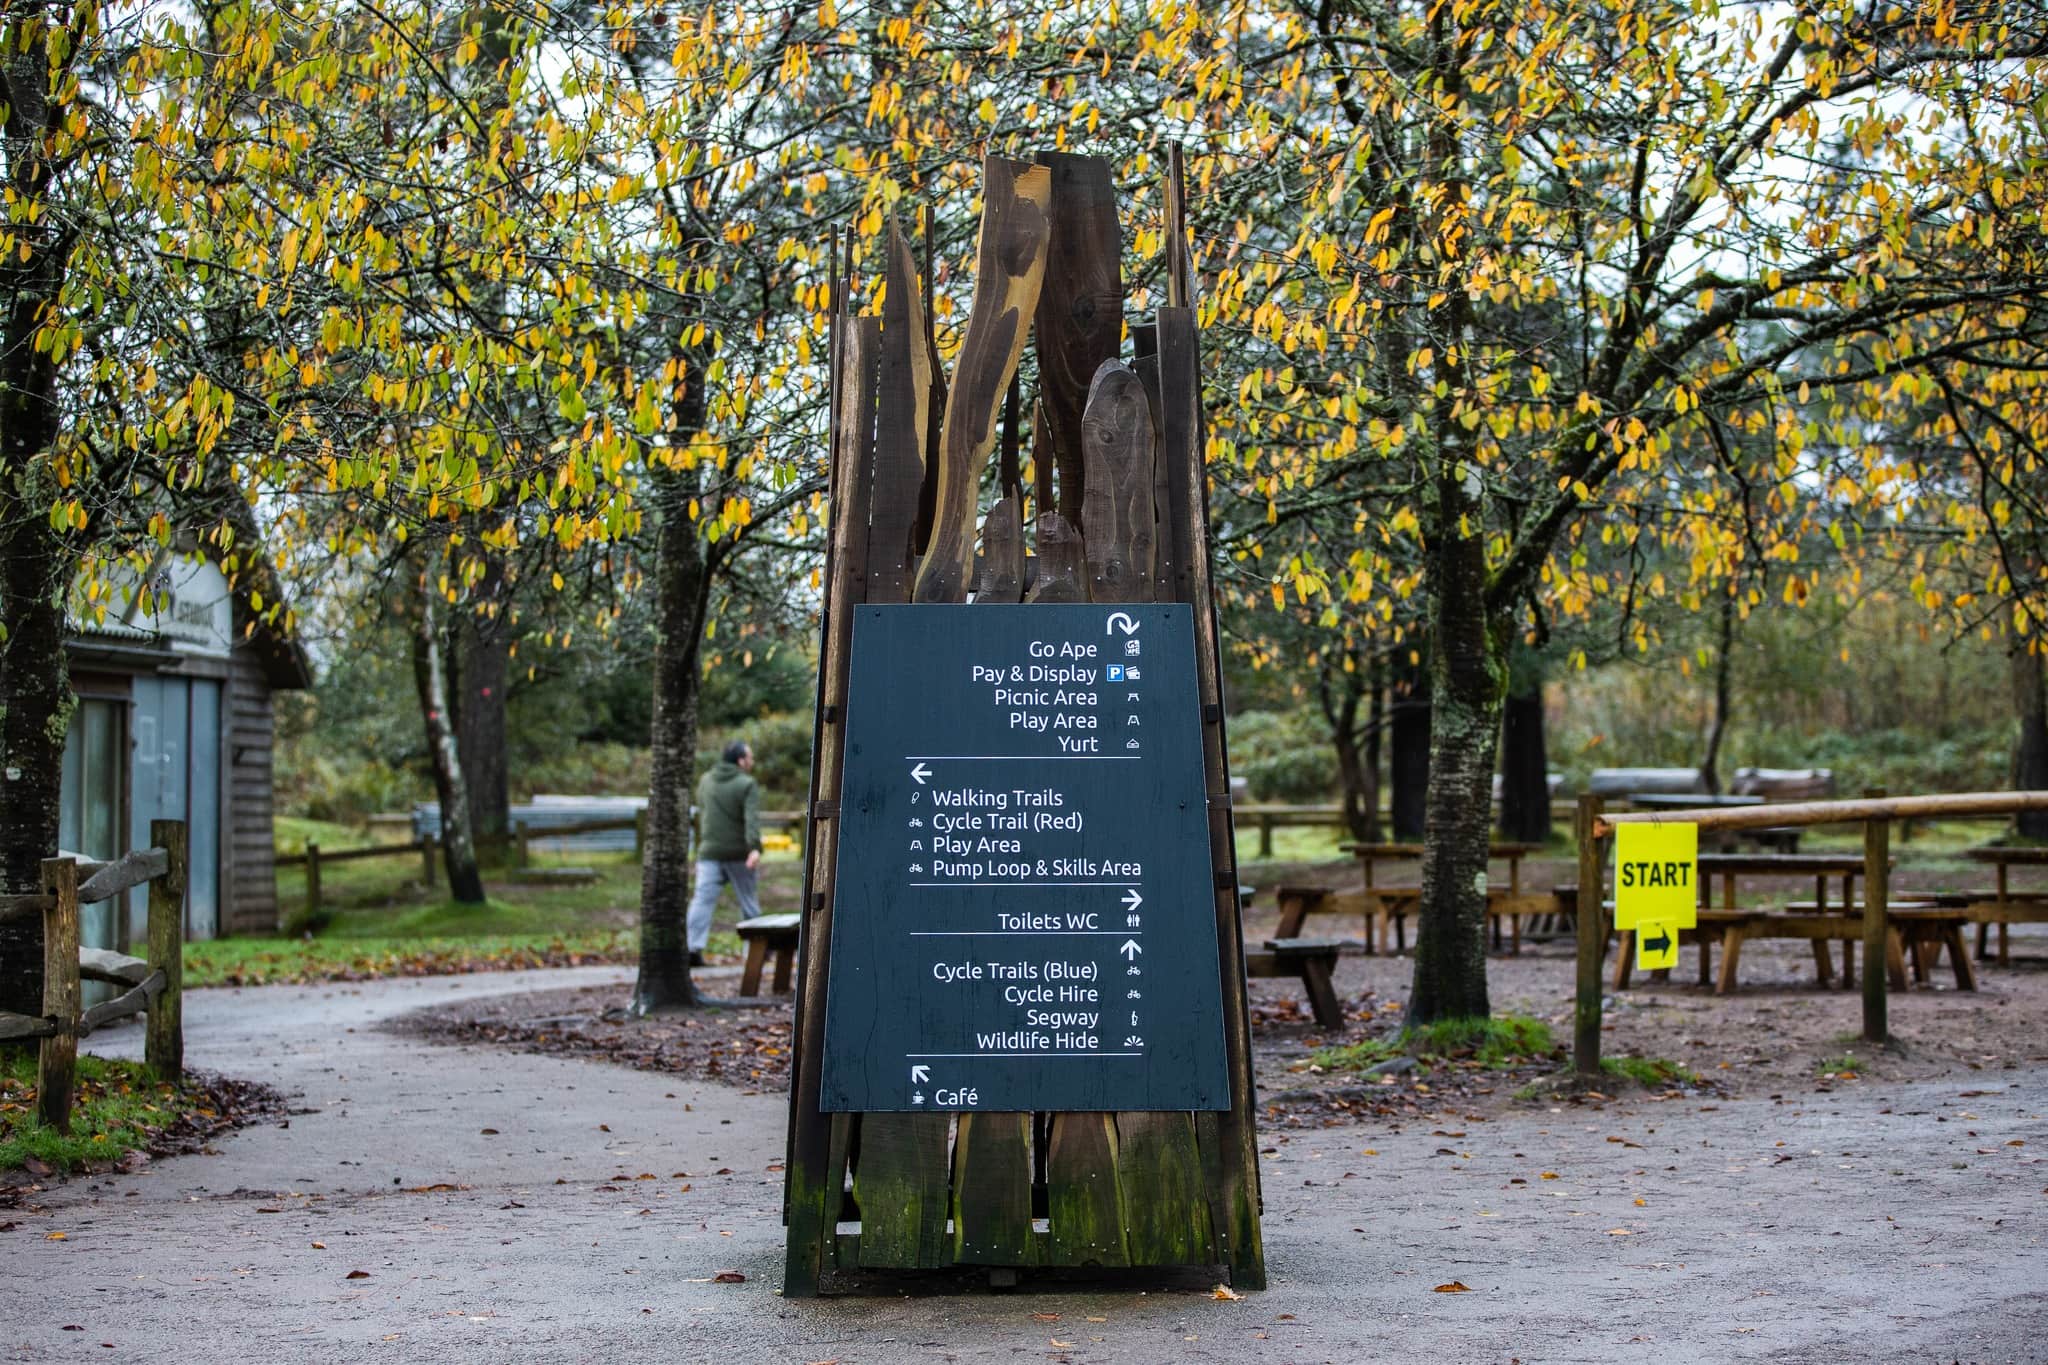 Haldon Forest Park